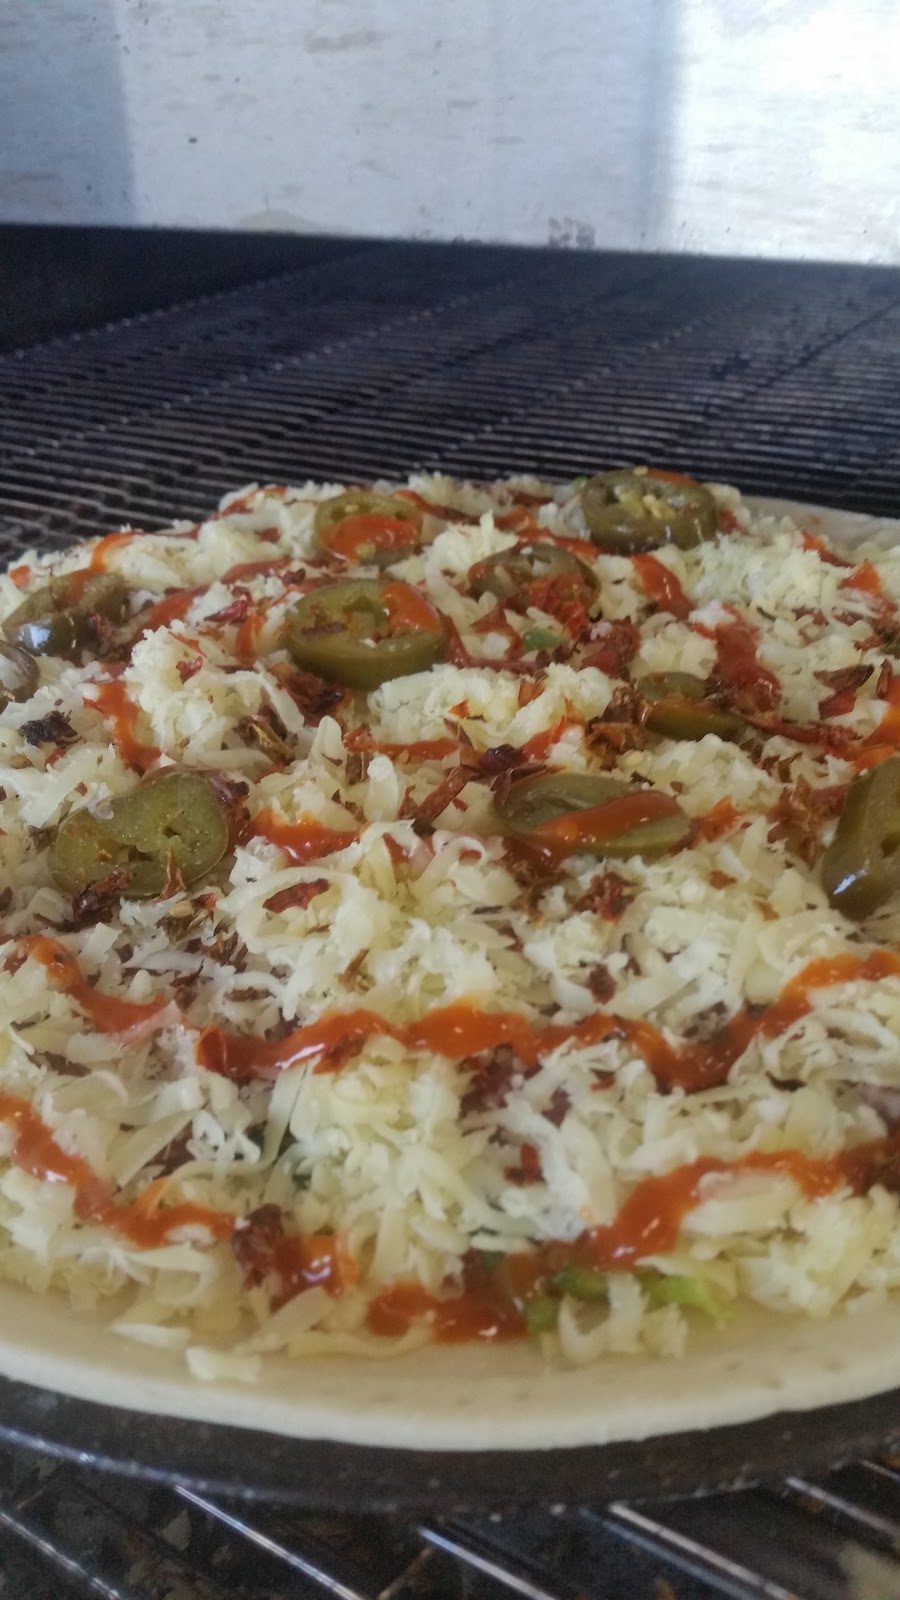 Cassino pizza | meal takeaway | 9/169 Canterbury St, Casino NSW 2470, Australia | 0266623555 OR +61 2 6662 3555